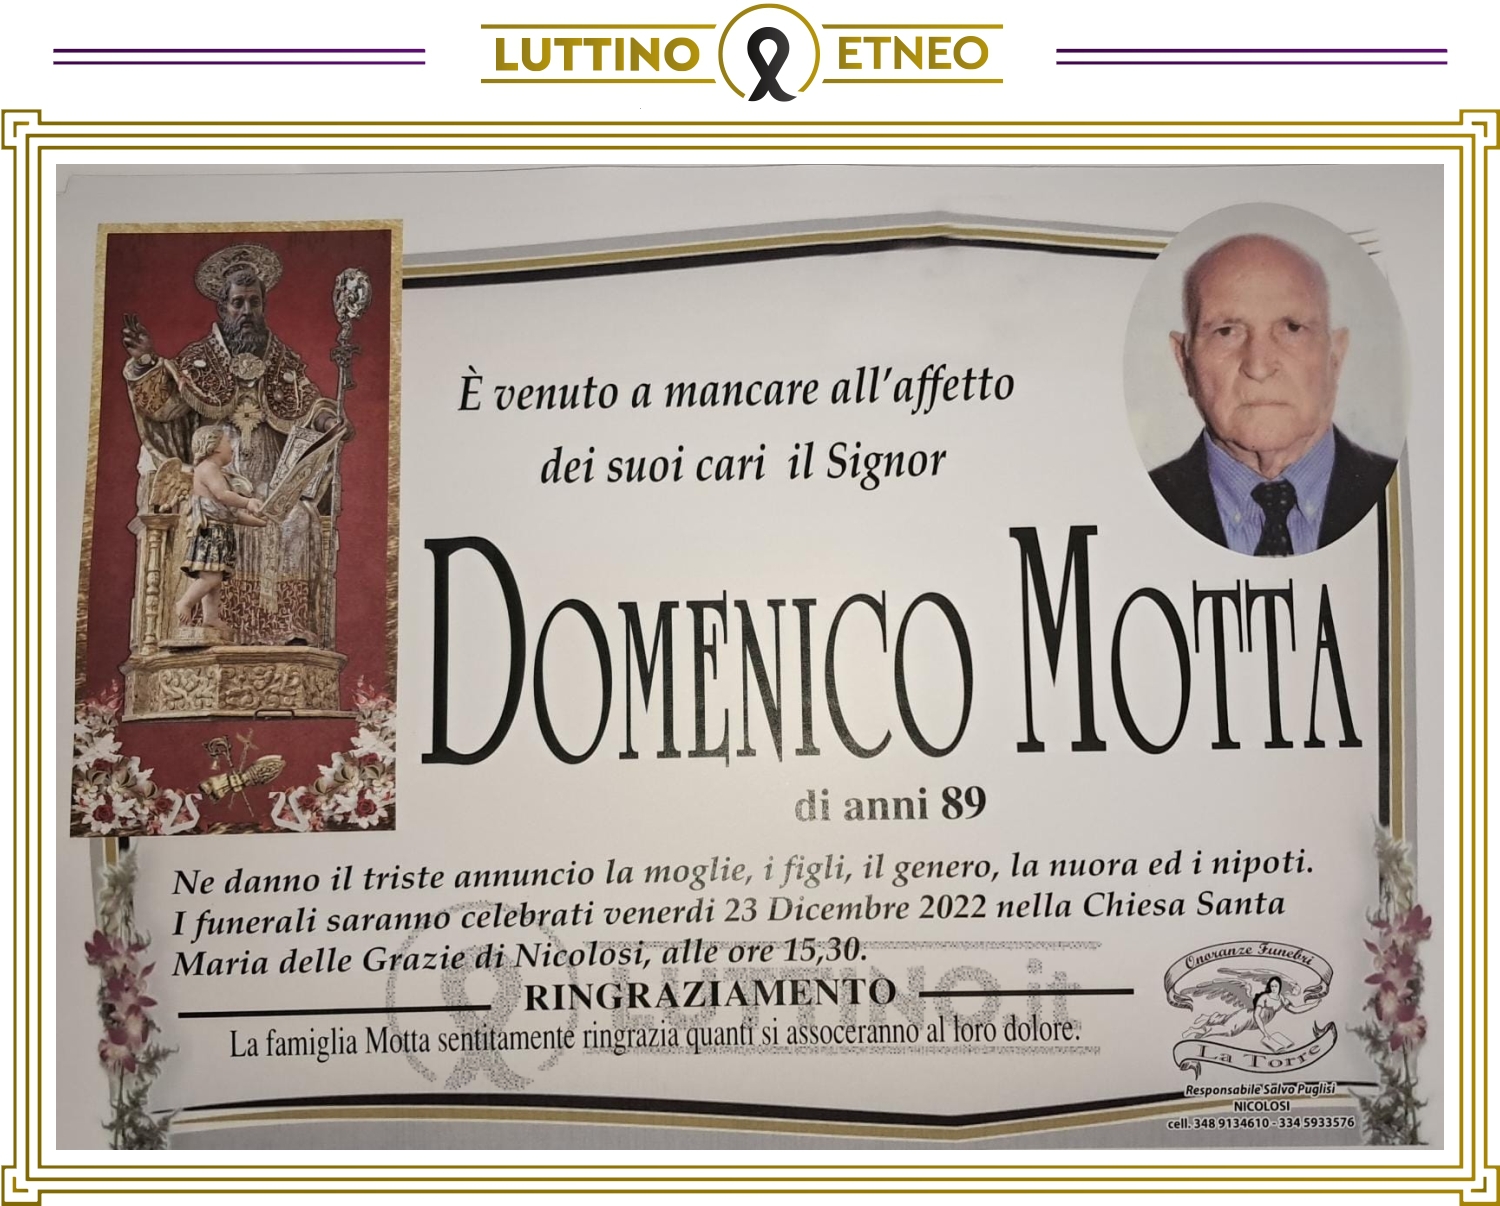 Domenico Motta 